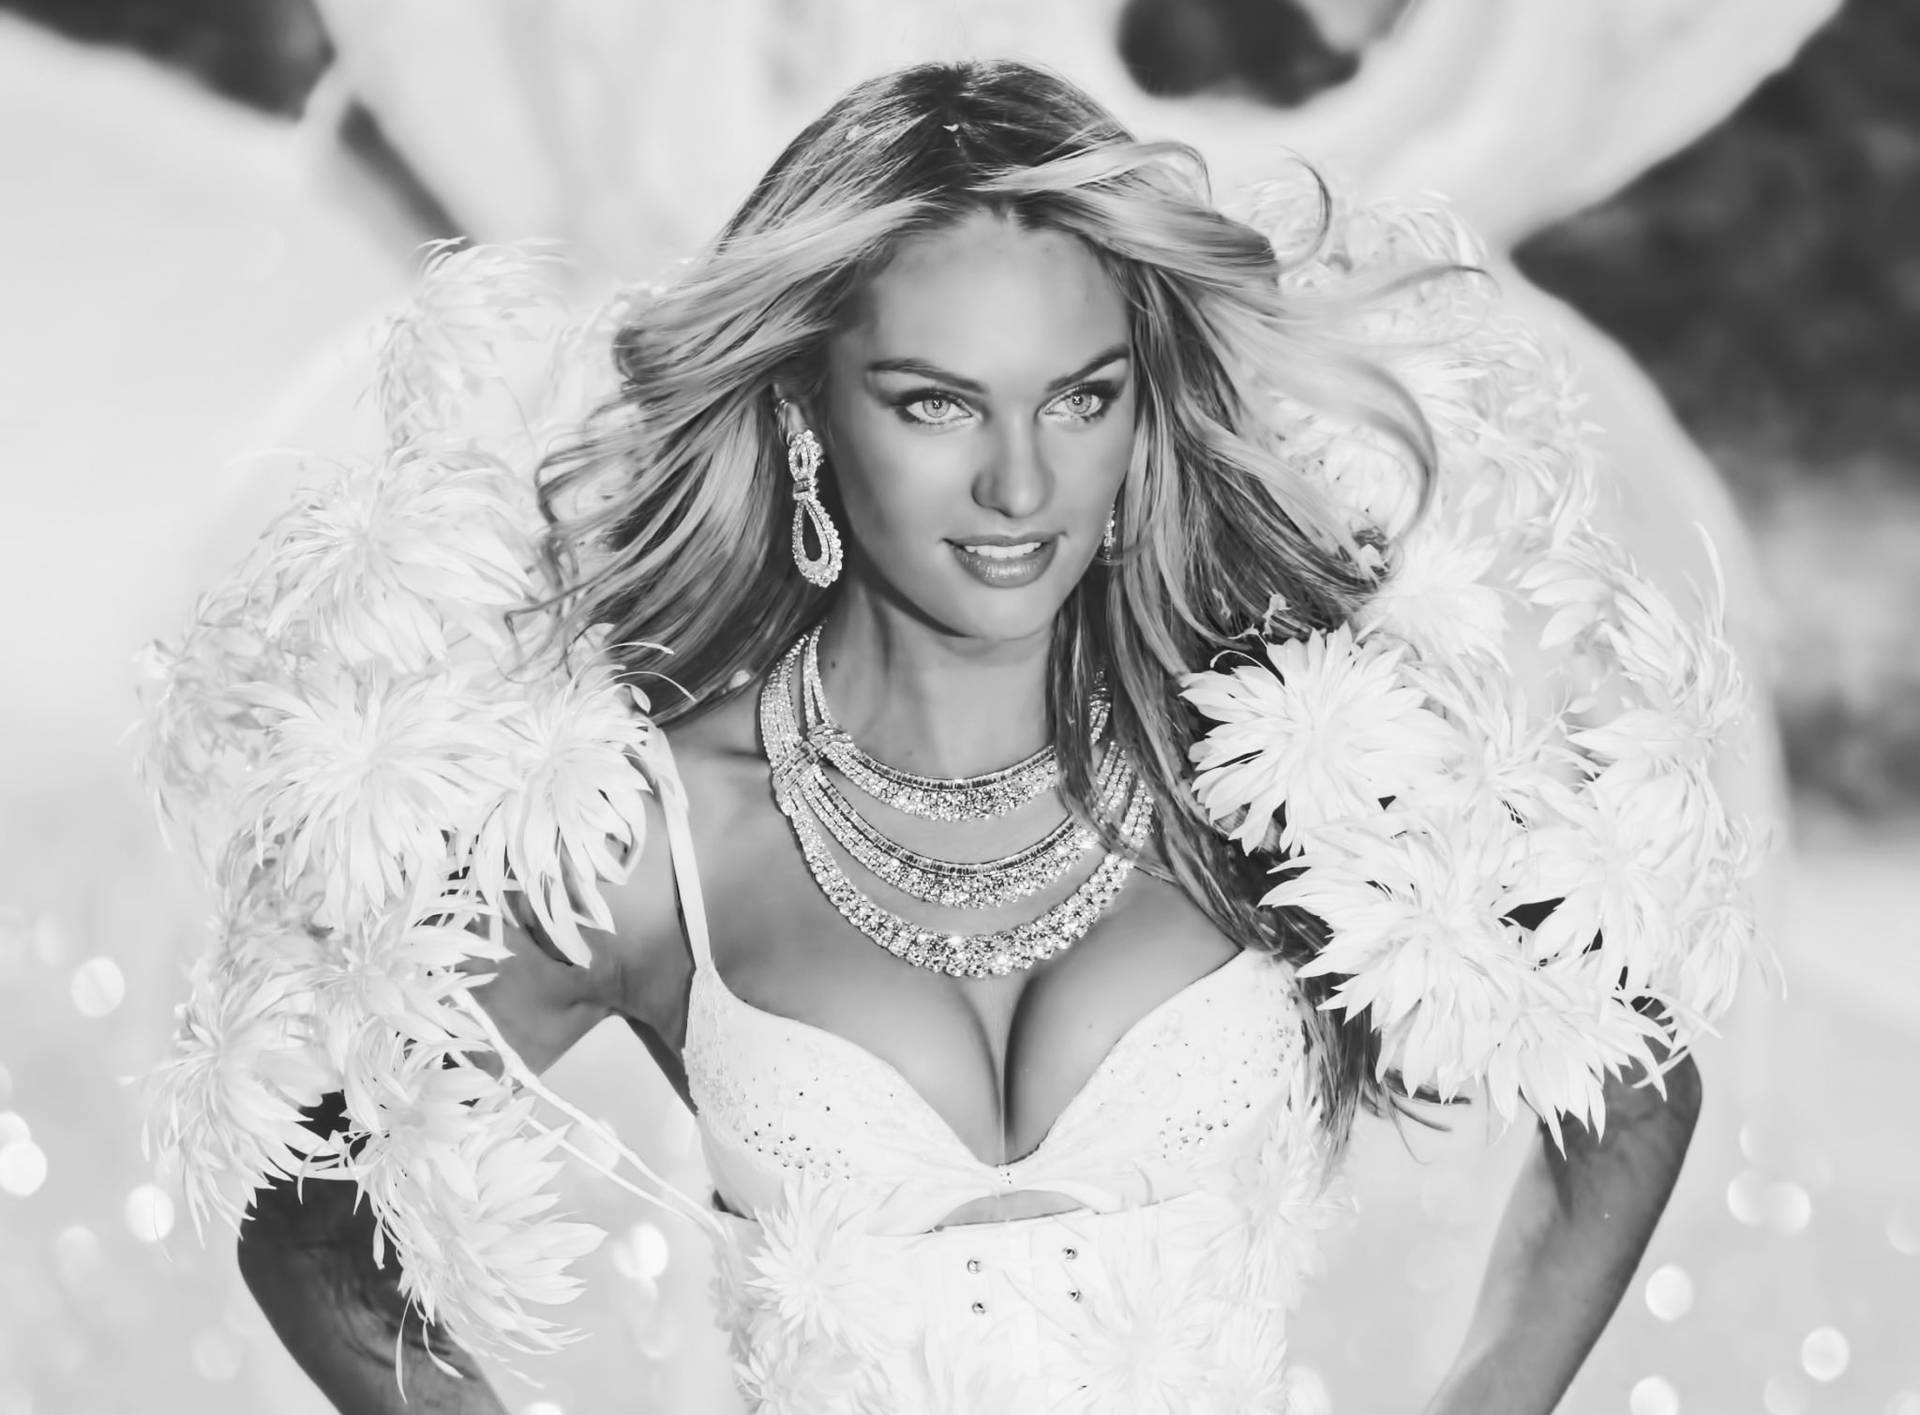 Victoria’s Secret Angel Candice Swanepoel Looking Stunning In Her Photoshoot.